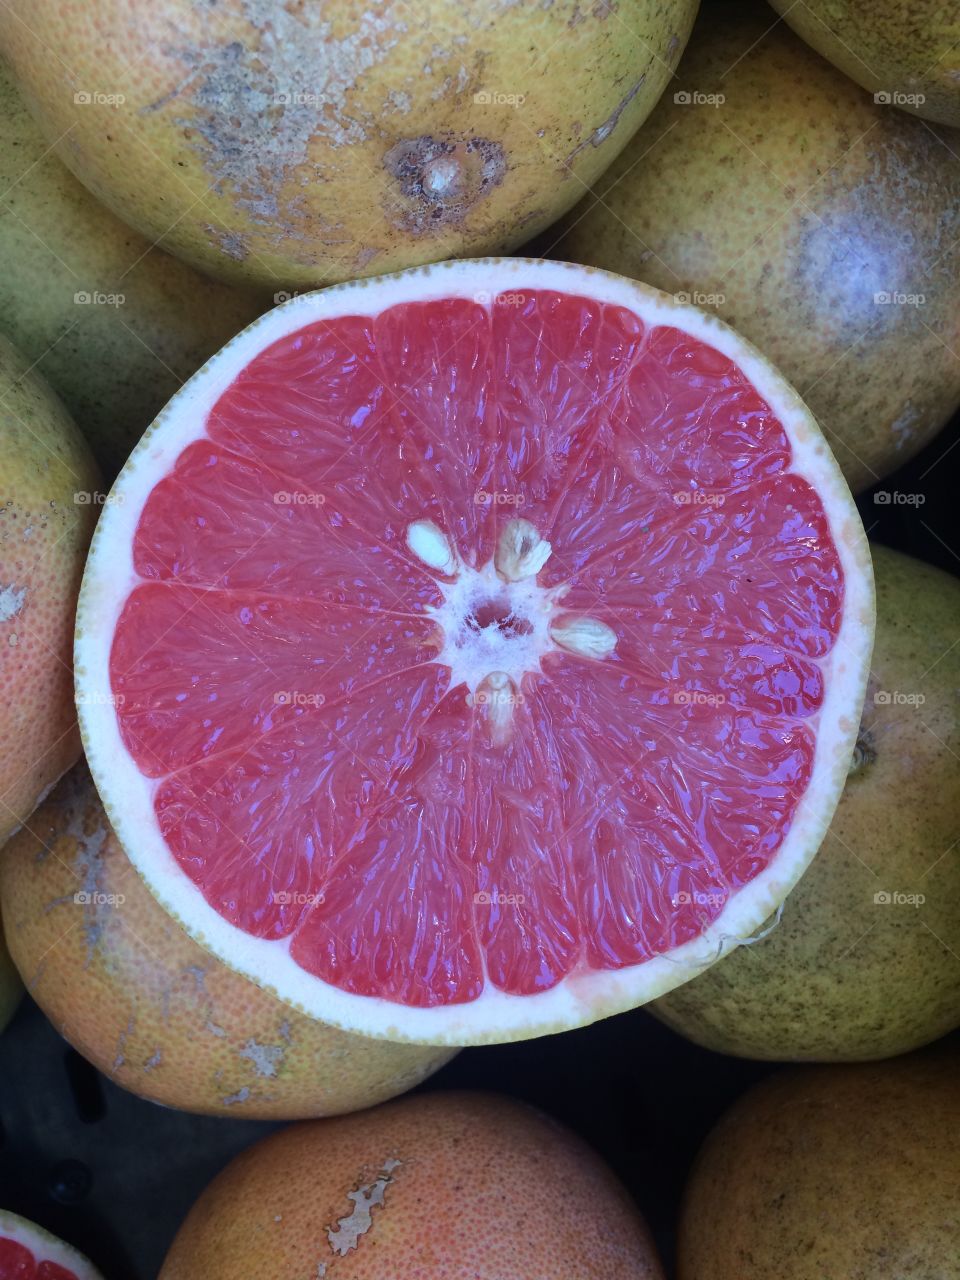 Farmers market grapefruit 